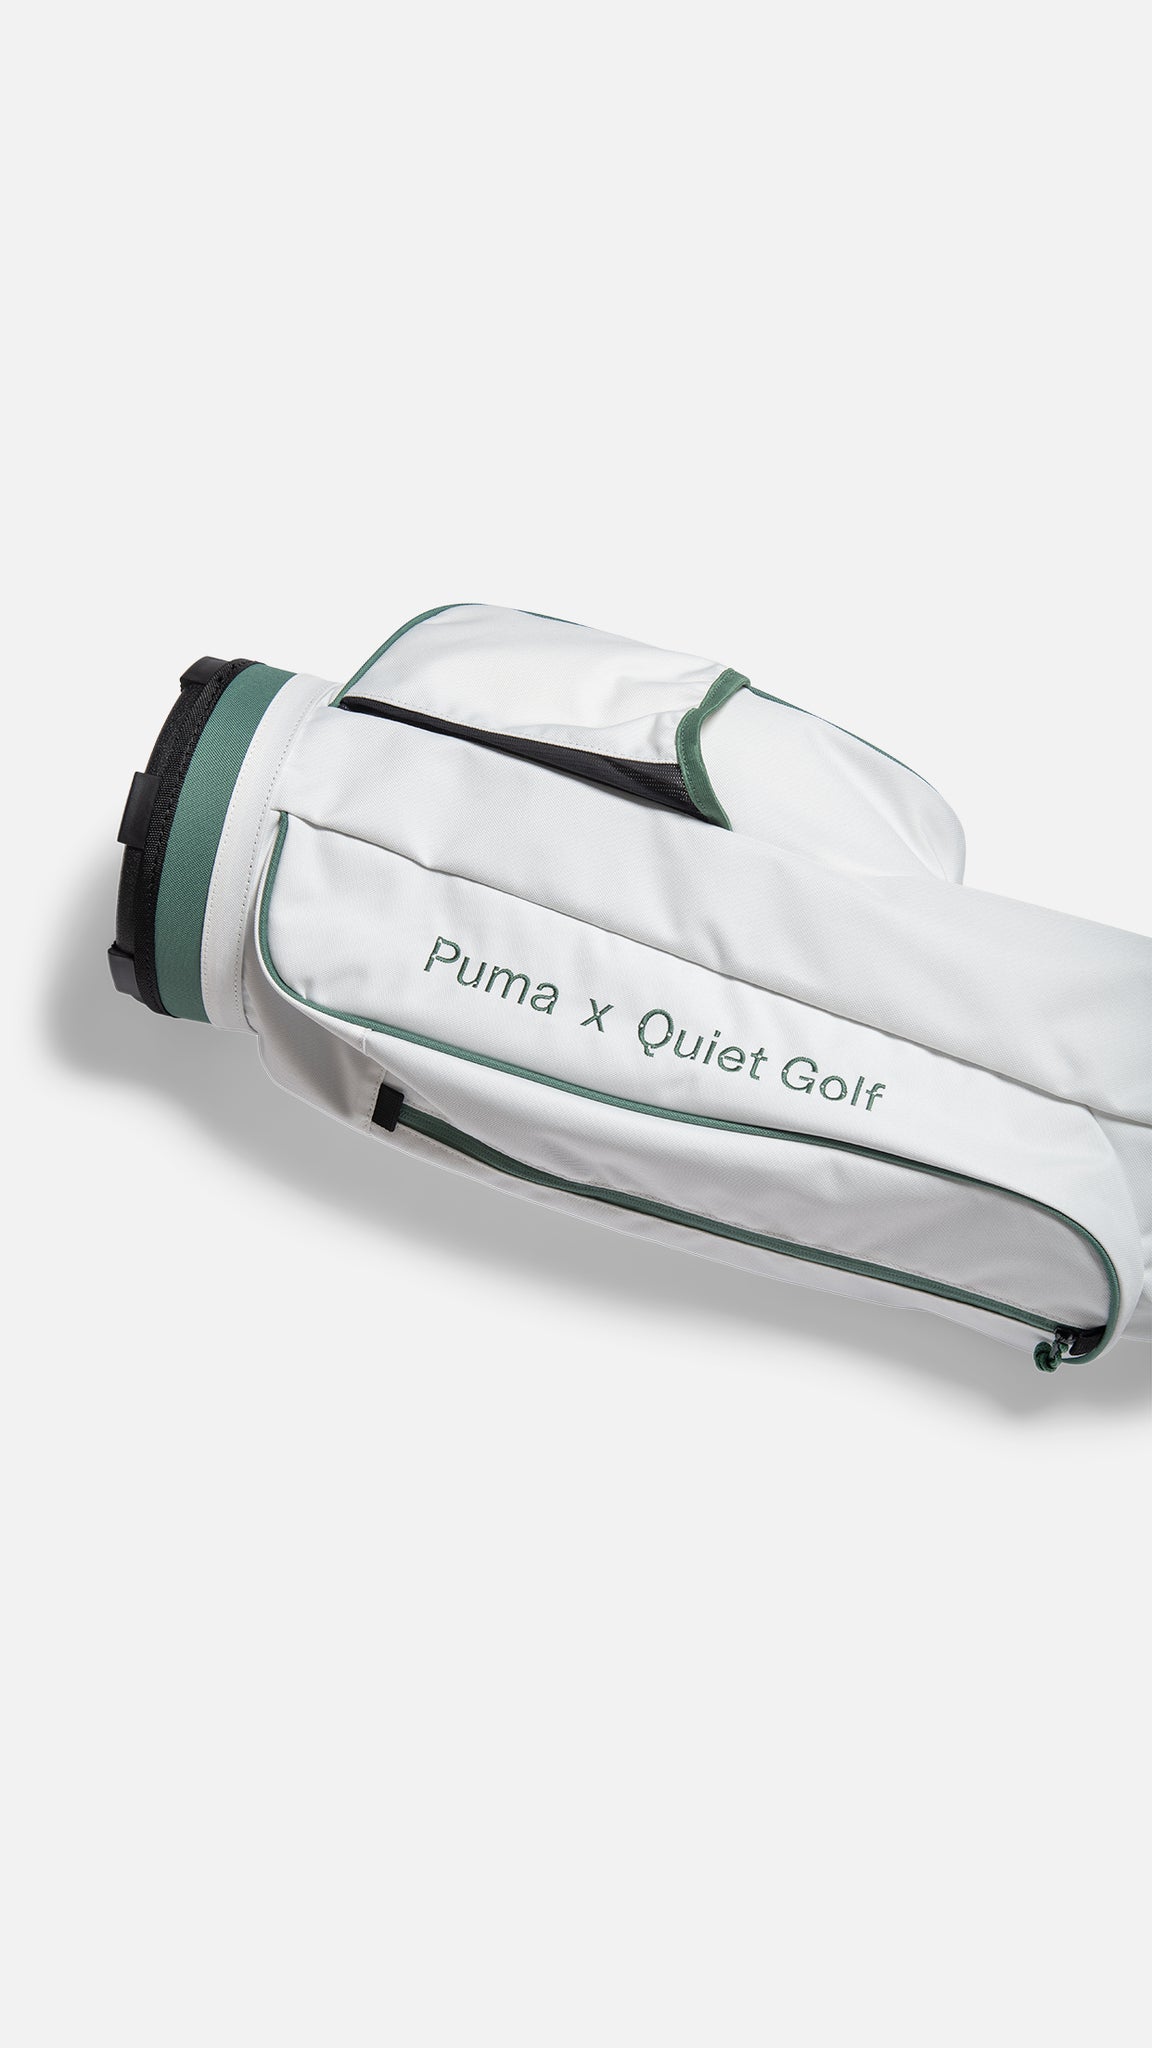 Quiet Golf x Puma Pencil Bag Warm White-Deep Forest